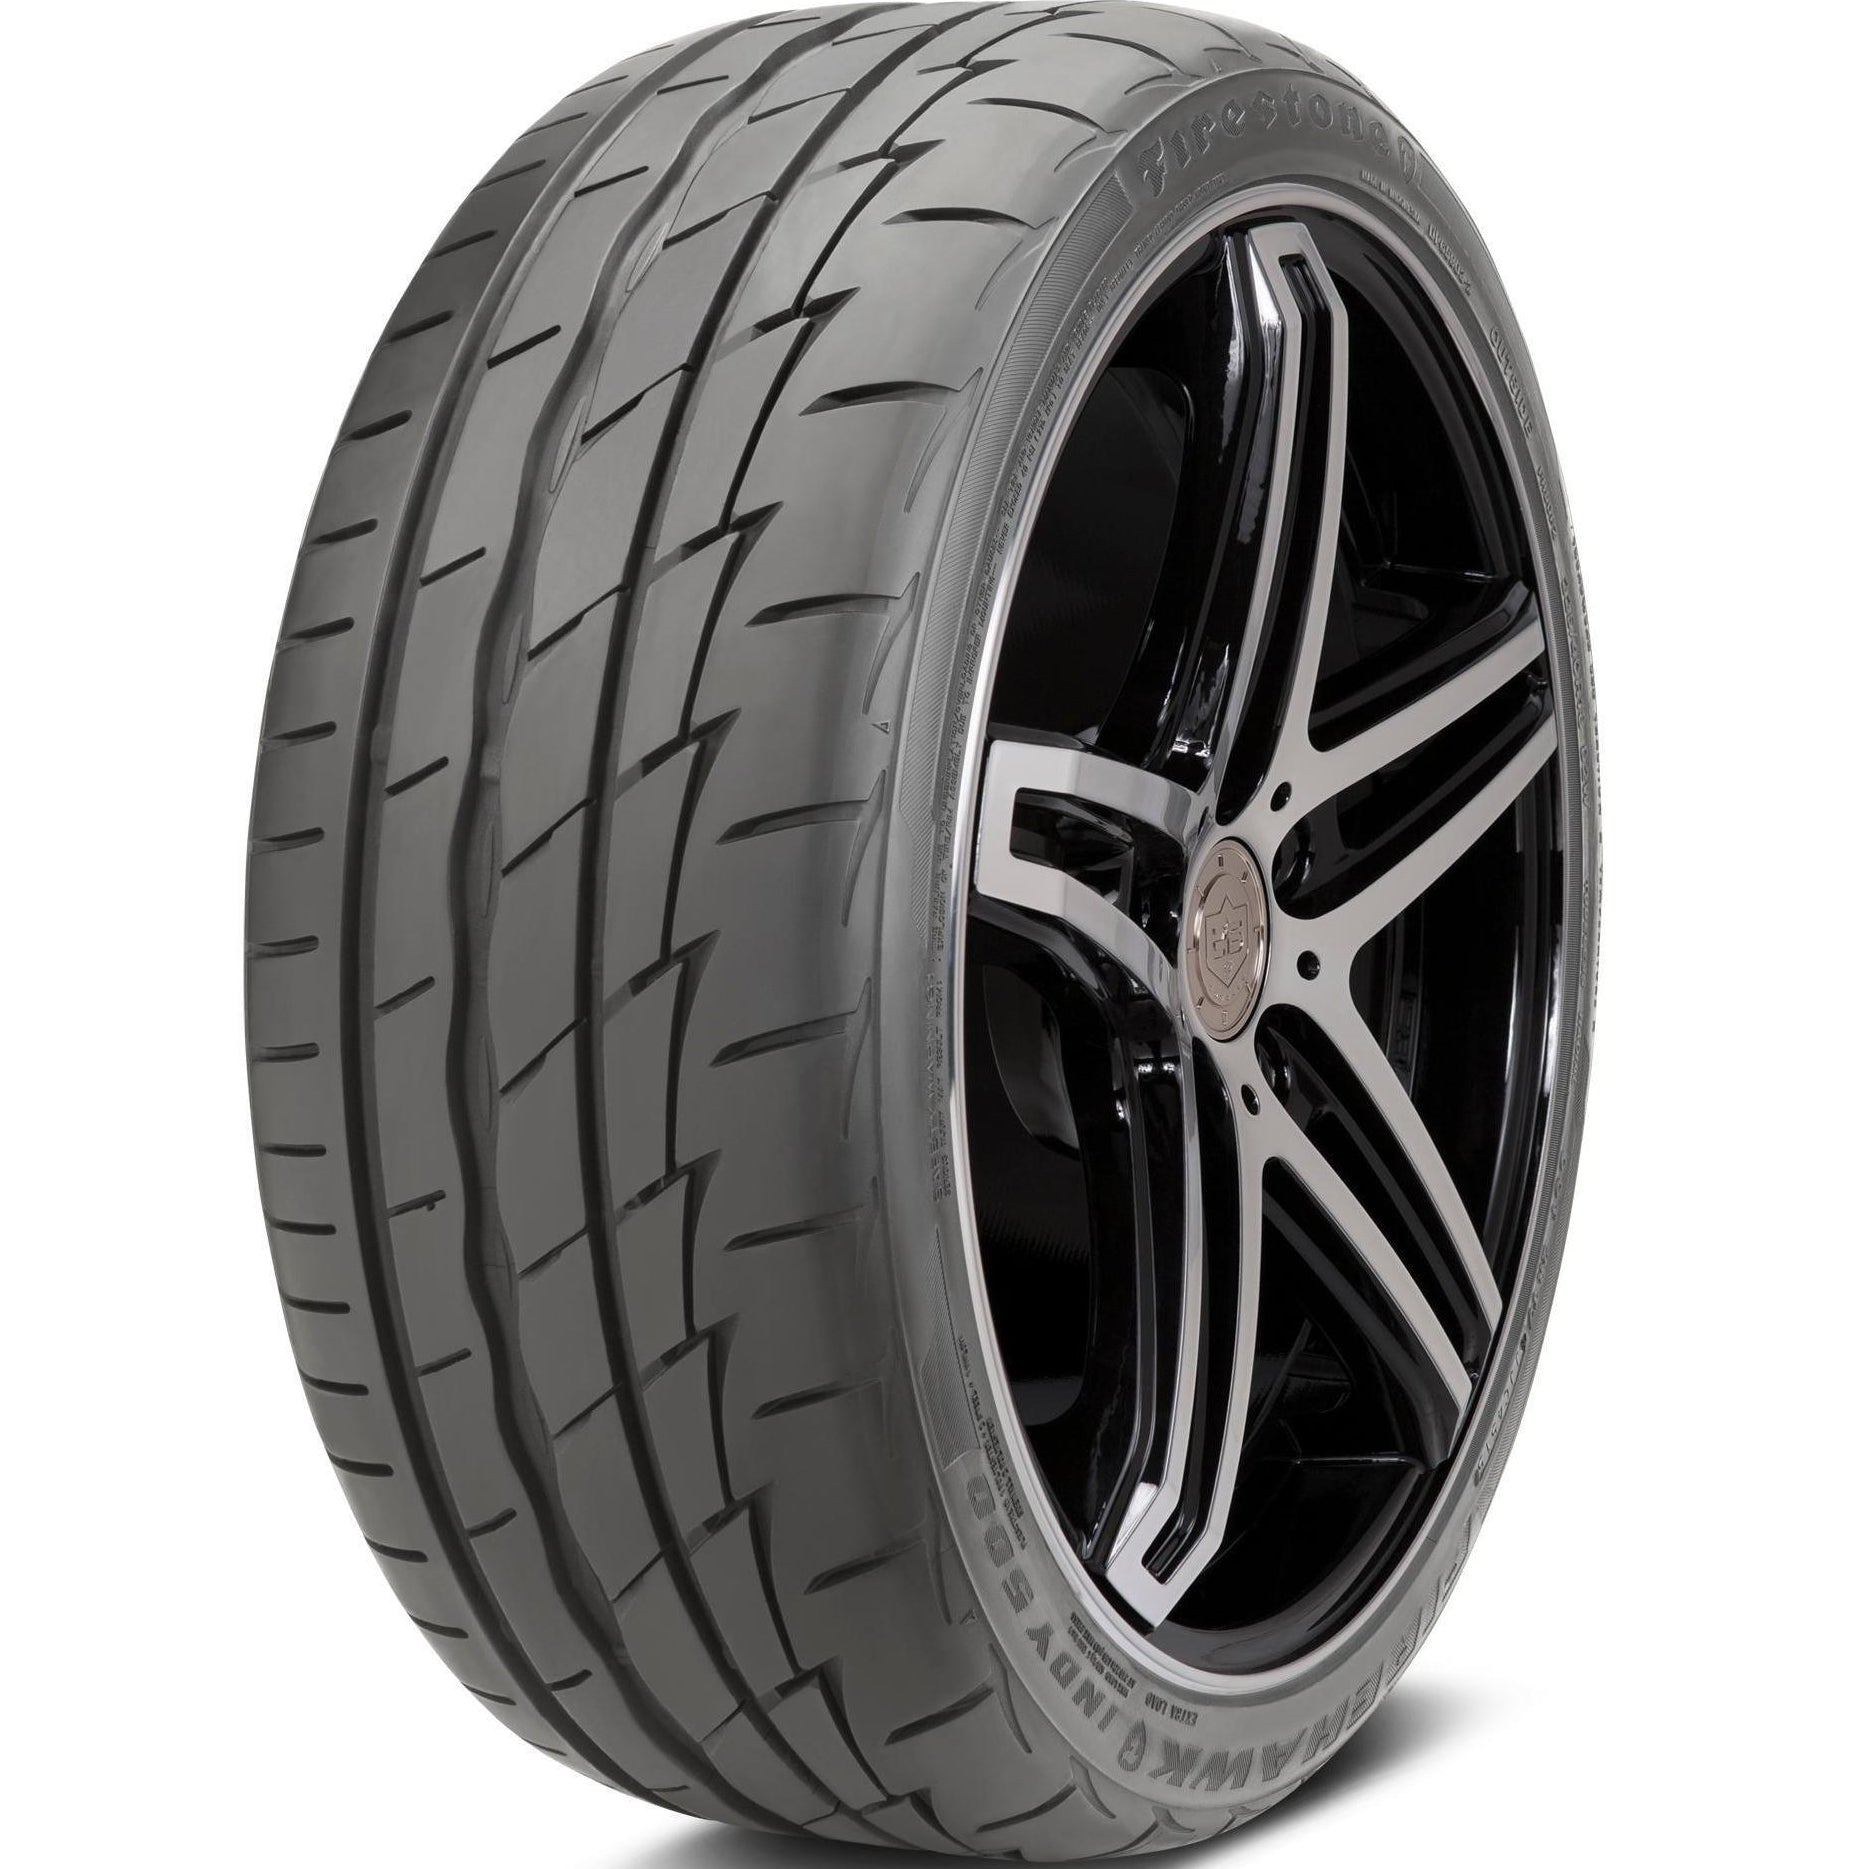 FIRESTONE FIREHAWK INDY 500 265/30R19 (25.3X10.4R 19) Tires